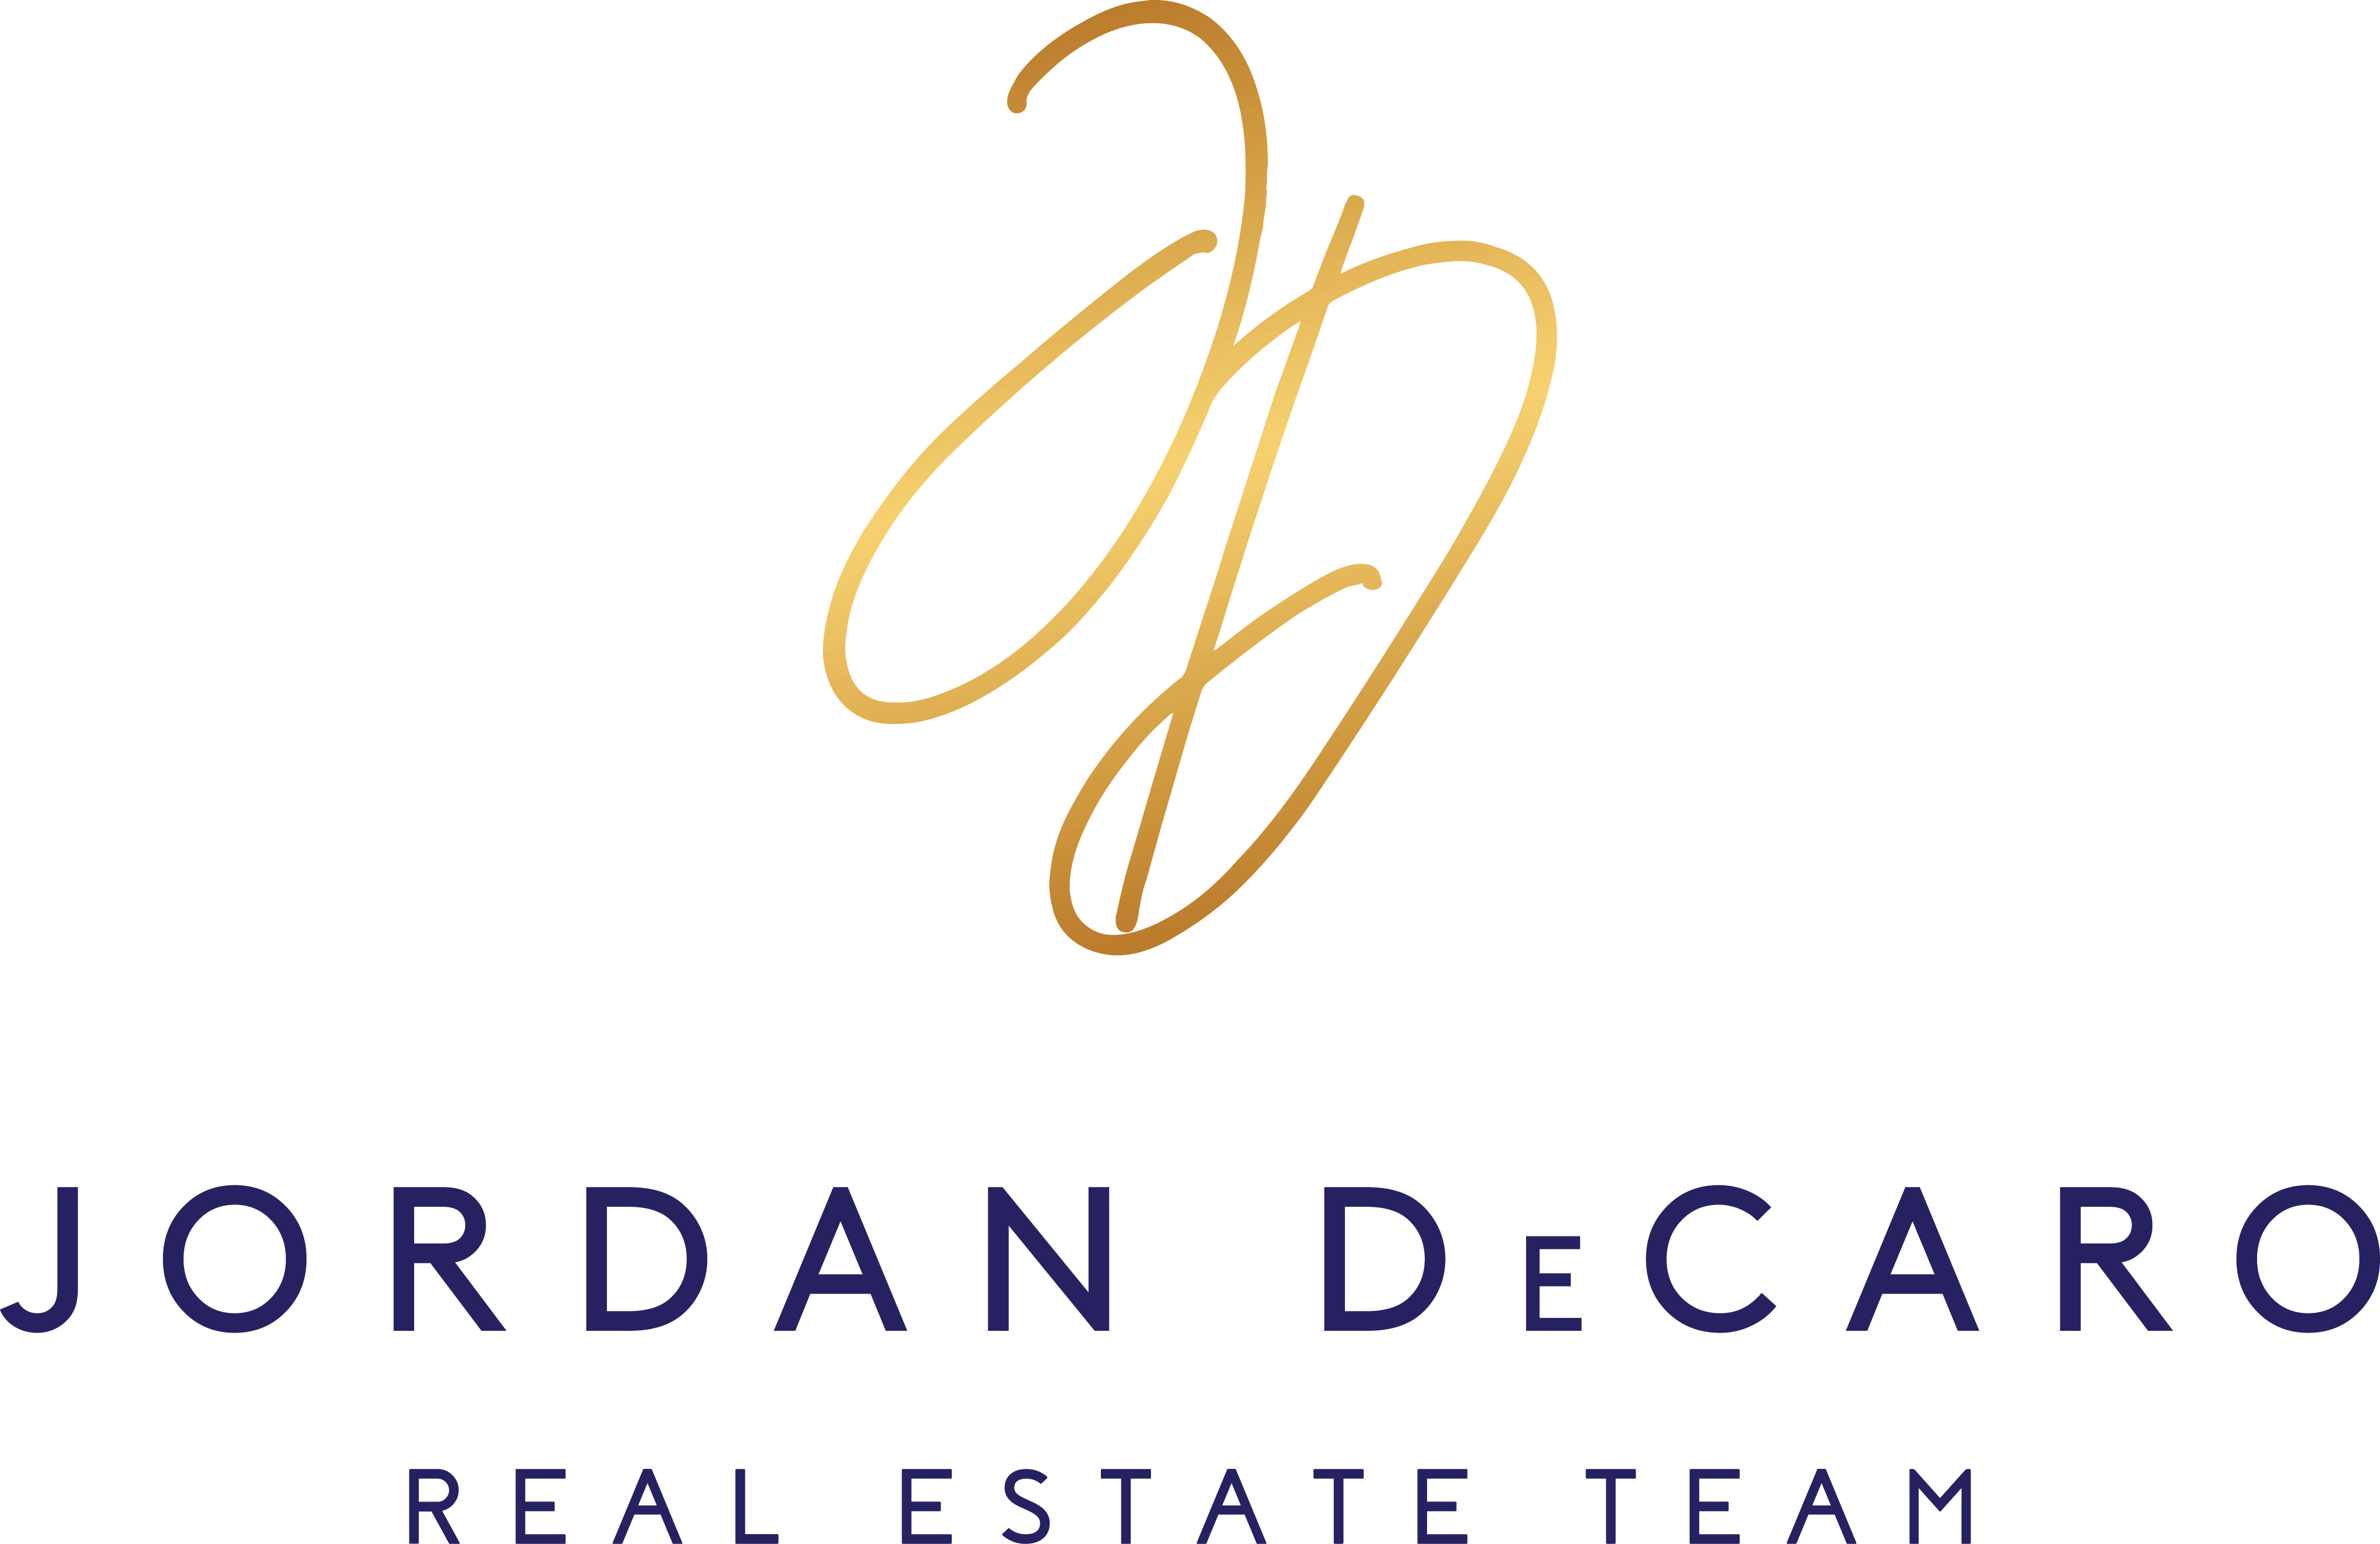 Jordan DeCaro Real Estate Team